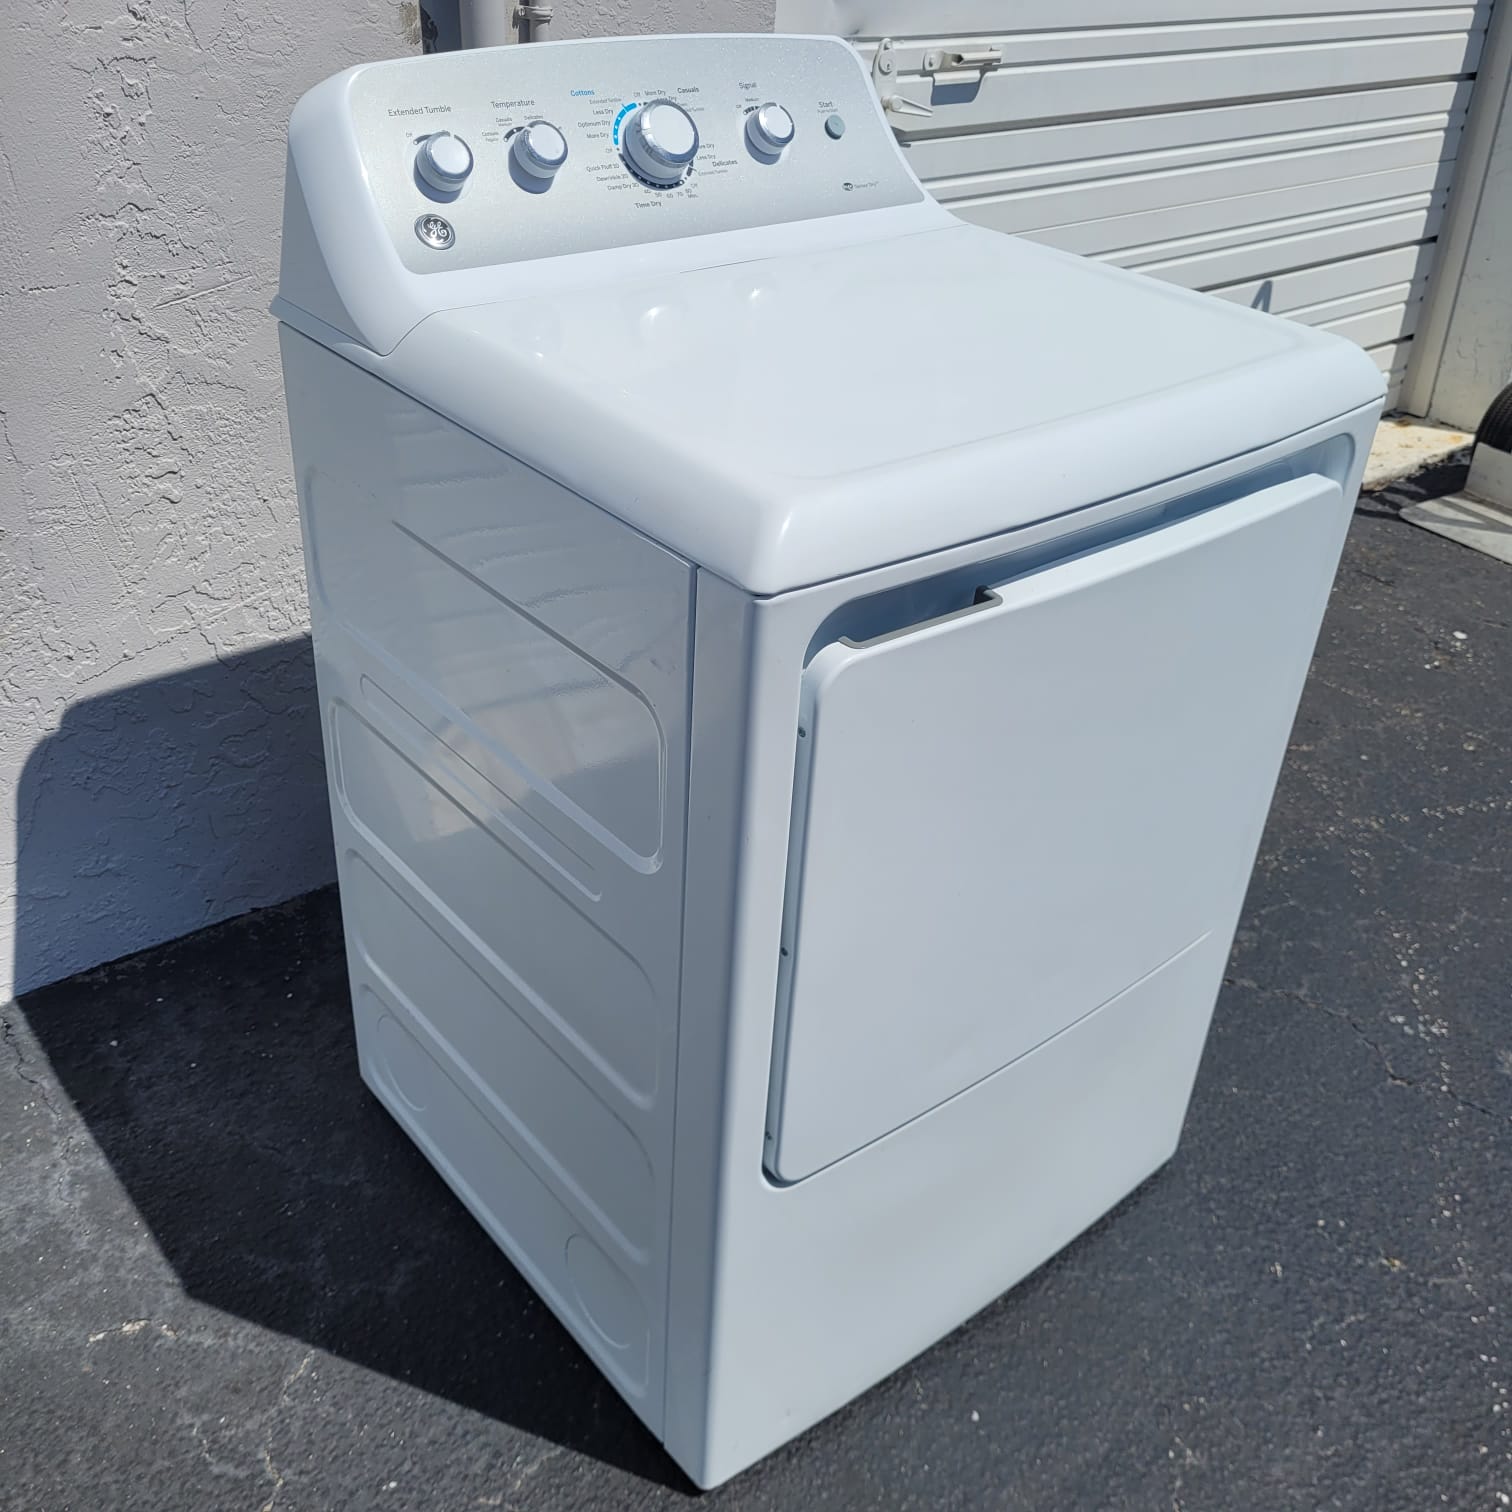 GE Gas Dryer